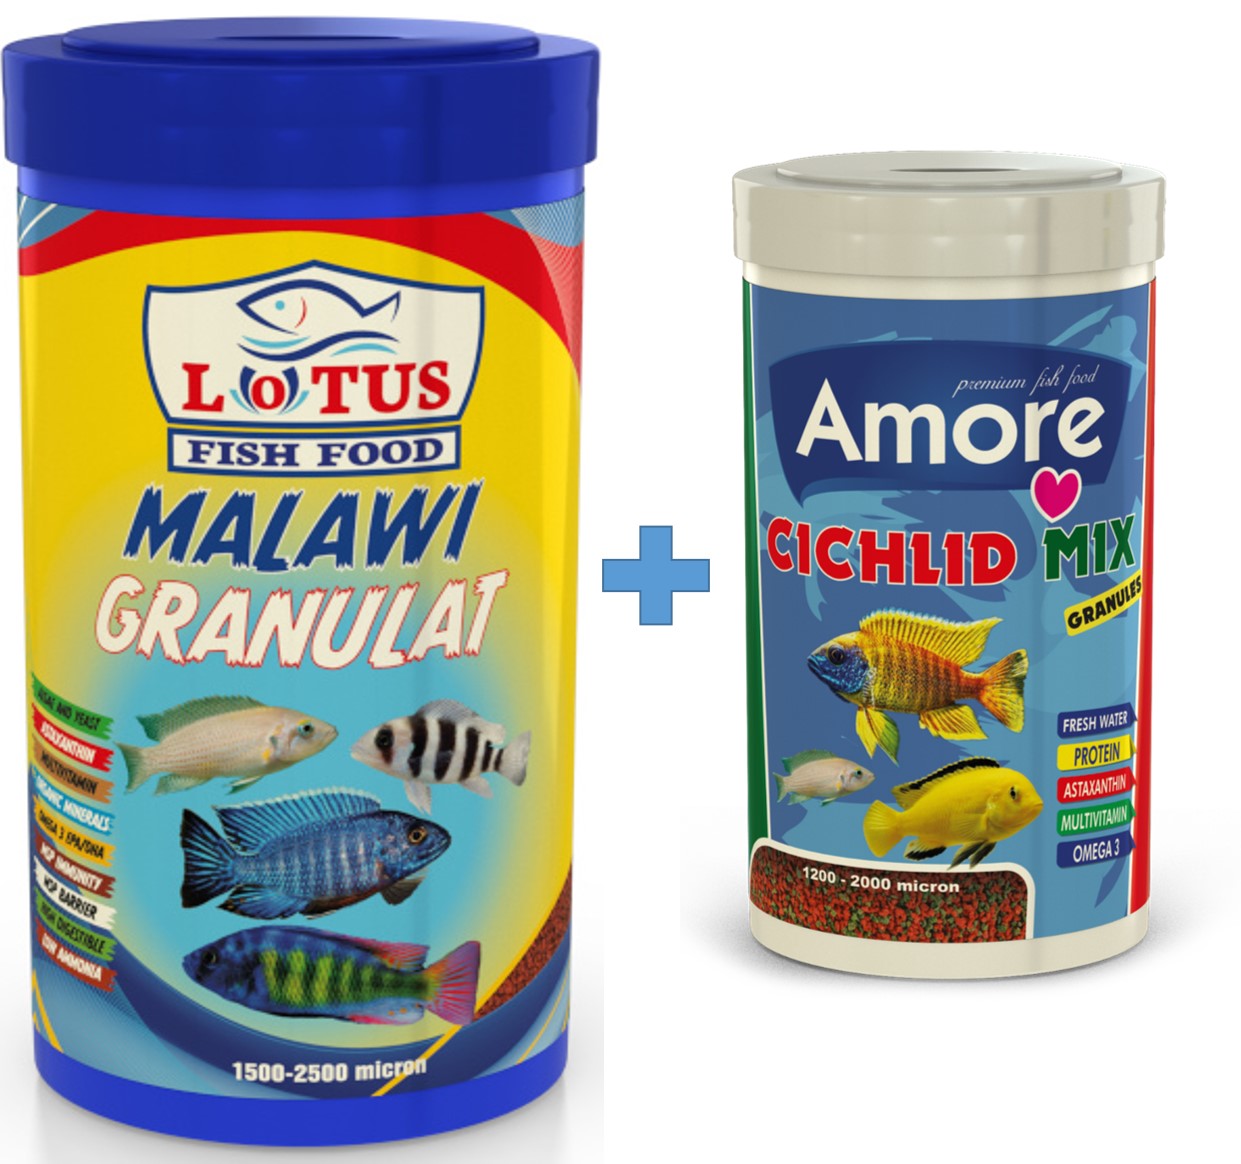 Lotus Malawi Granulat 1000ml Ve Amore Cichlid Mix Granules 250ml Kutu Balık Yemi